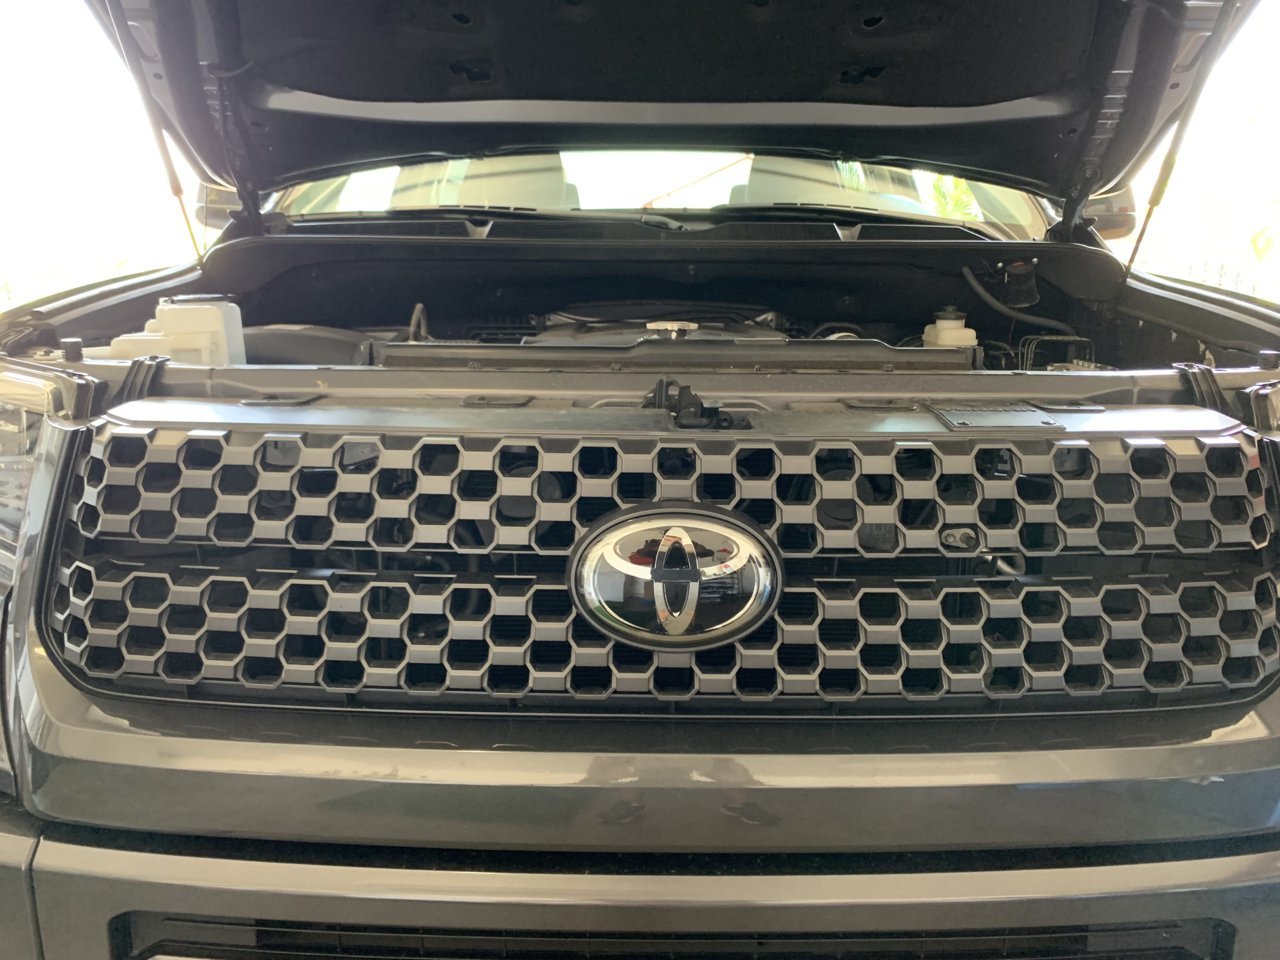 2018 Front Emblem | Toyota Tundra Forum